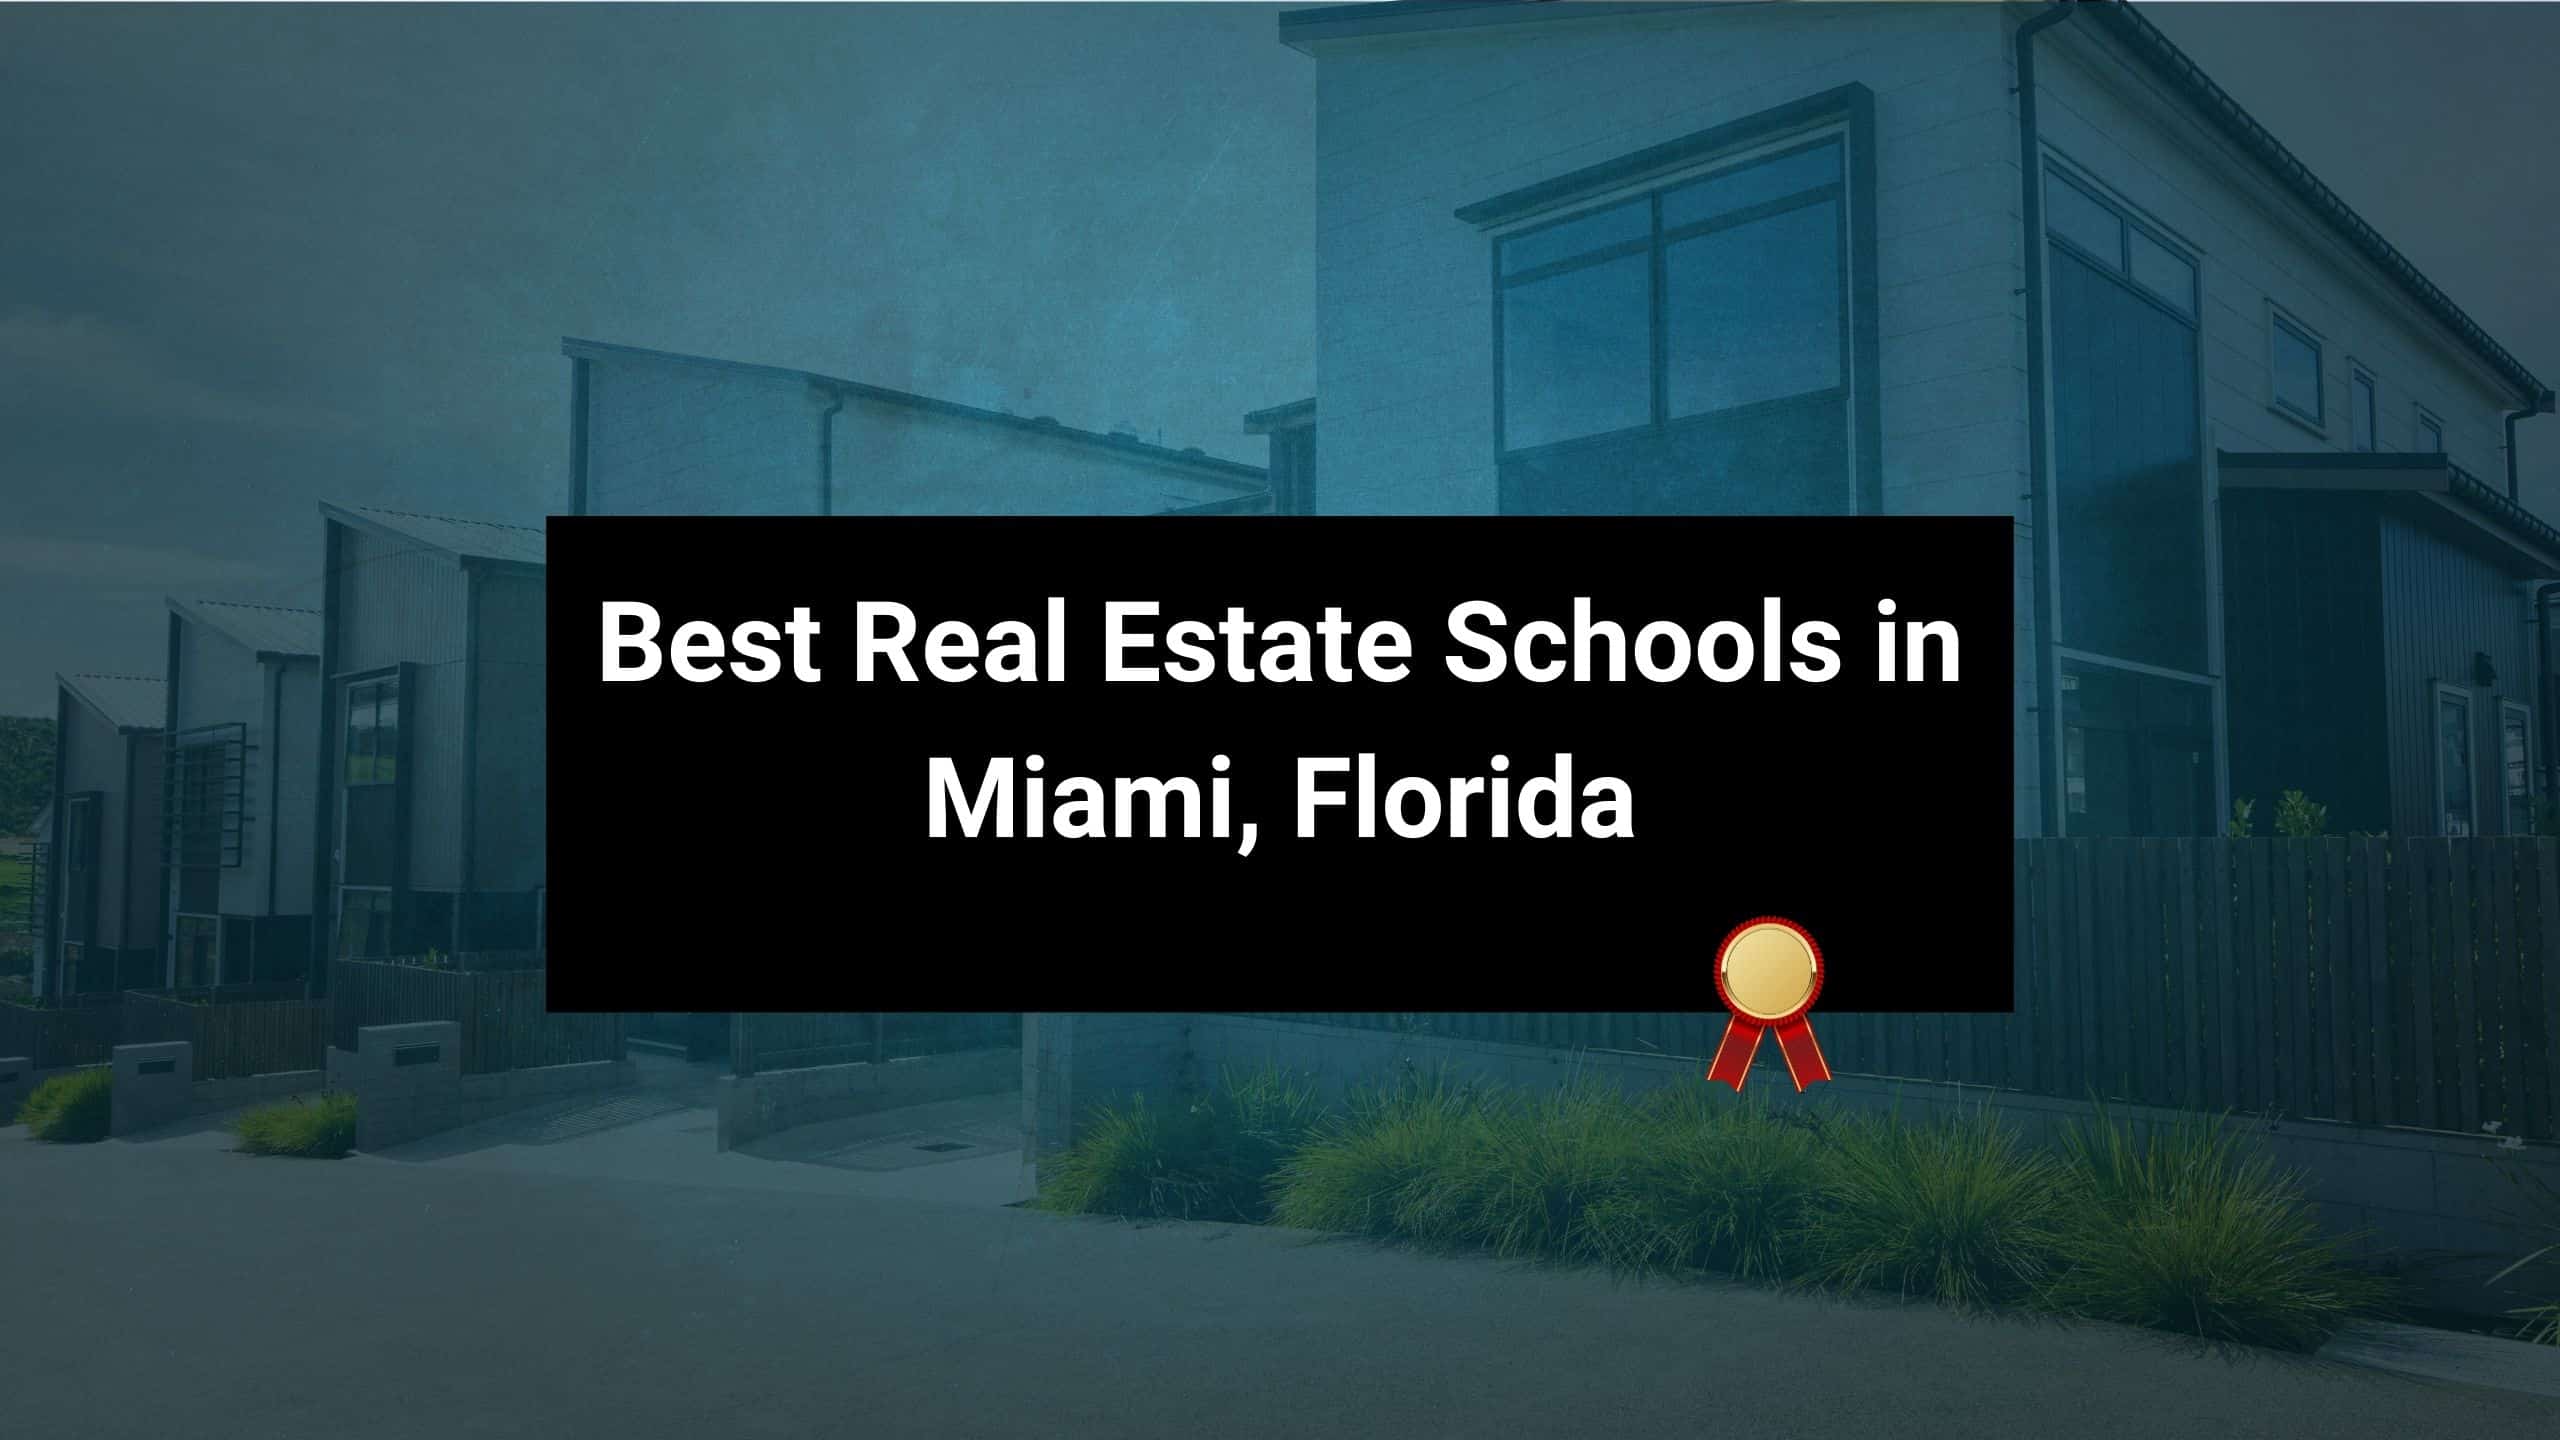 Best Real Estate Schools in Miami, Florida Image